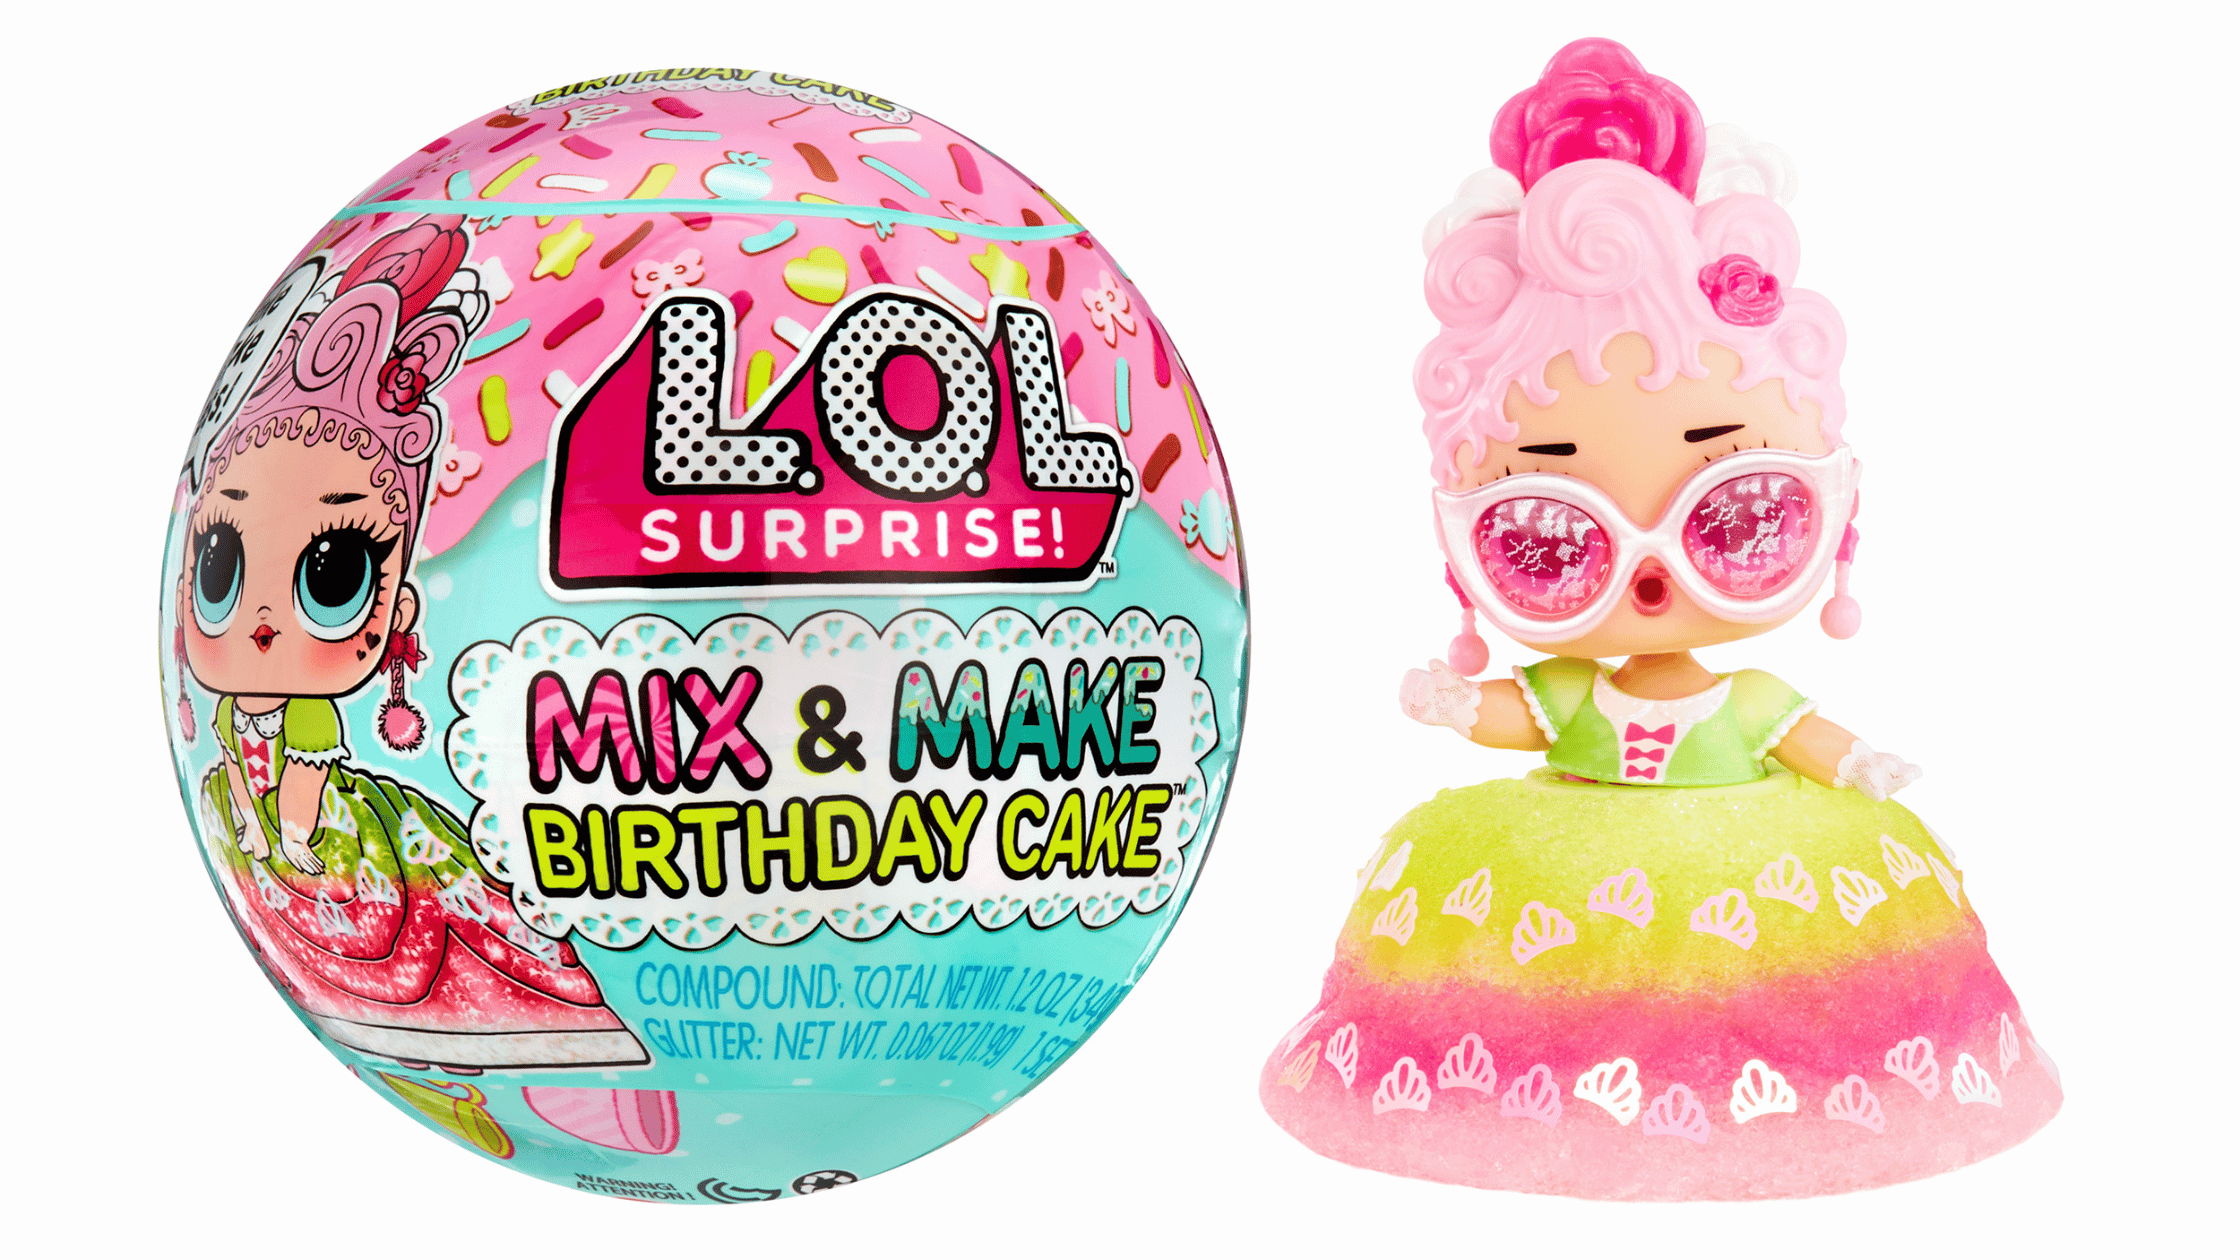 L.O.L. Surprise Mix & Make Birthday Cake